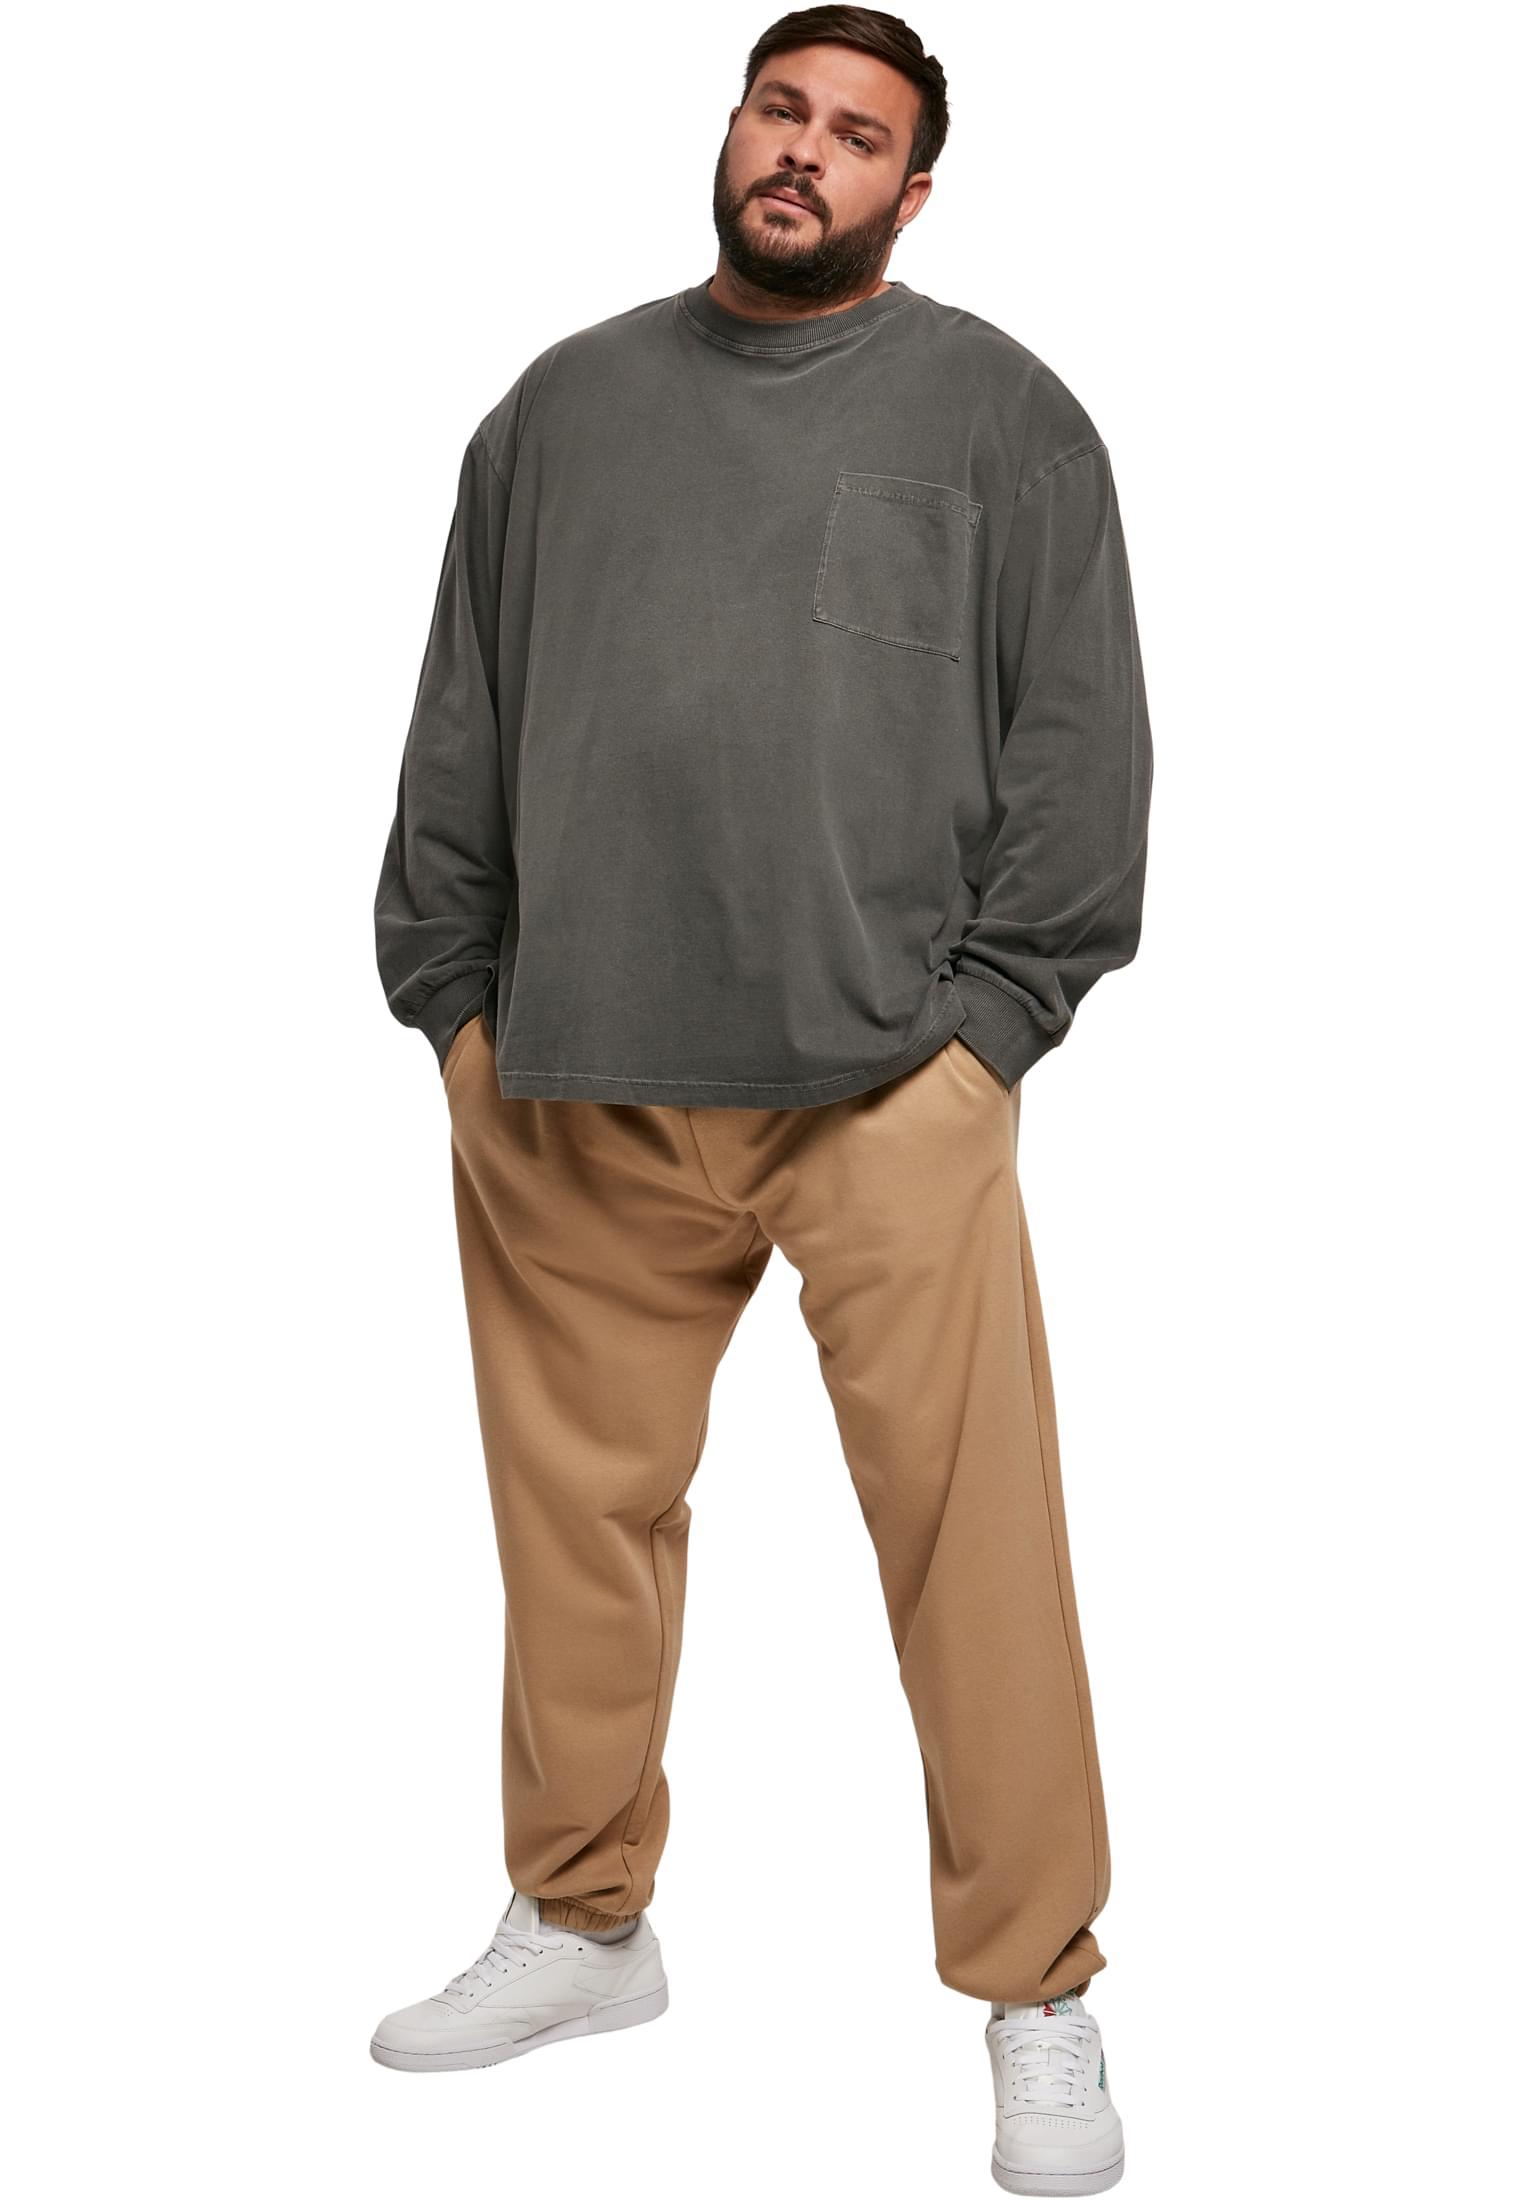 Urban Classics Plus Size Basic Sweatpants 2.0 (Farbe: warm sand / Größe: 4XL)